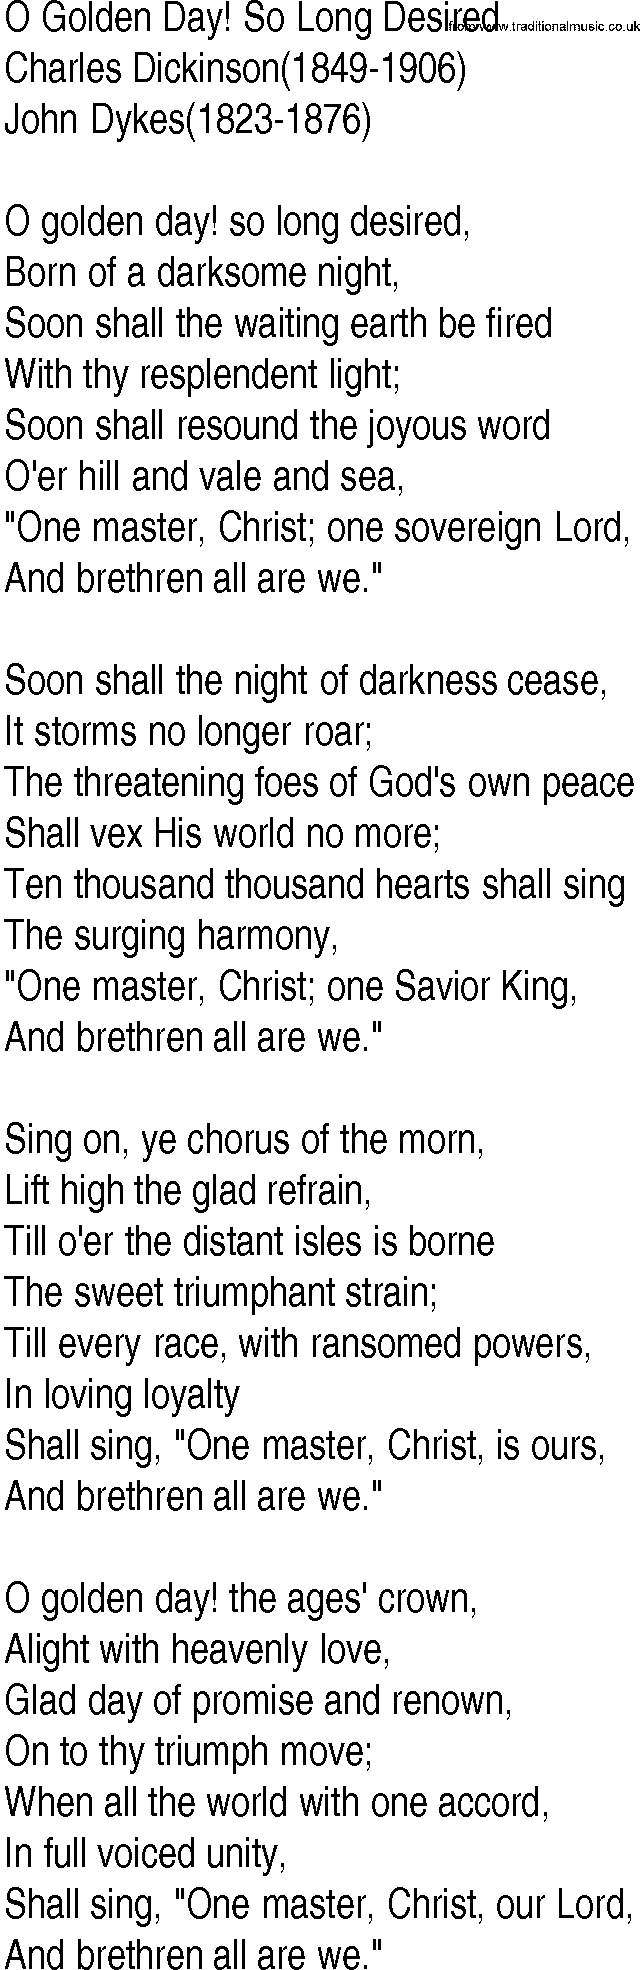 Hymn and Gospel Song: O Golden Day! So Long Desired by Charles Dickinson lyrics